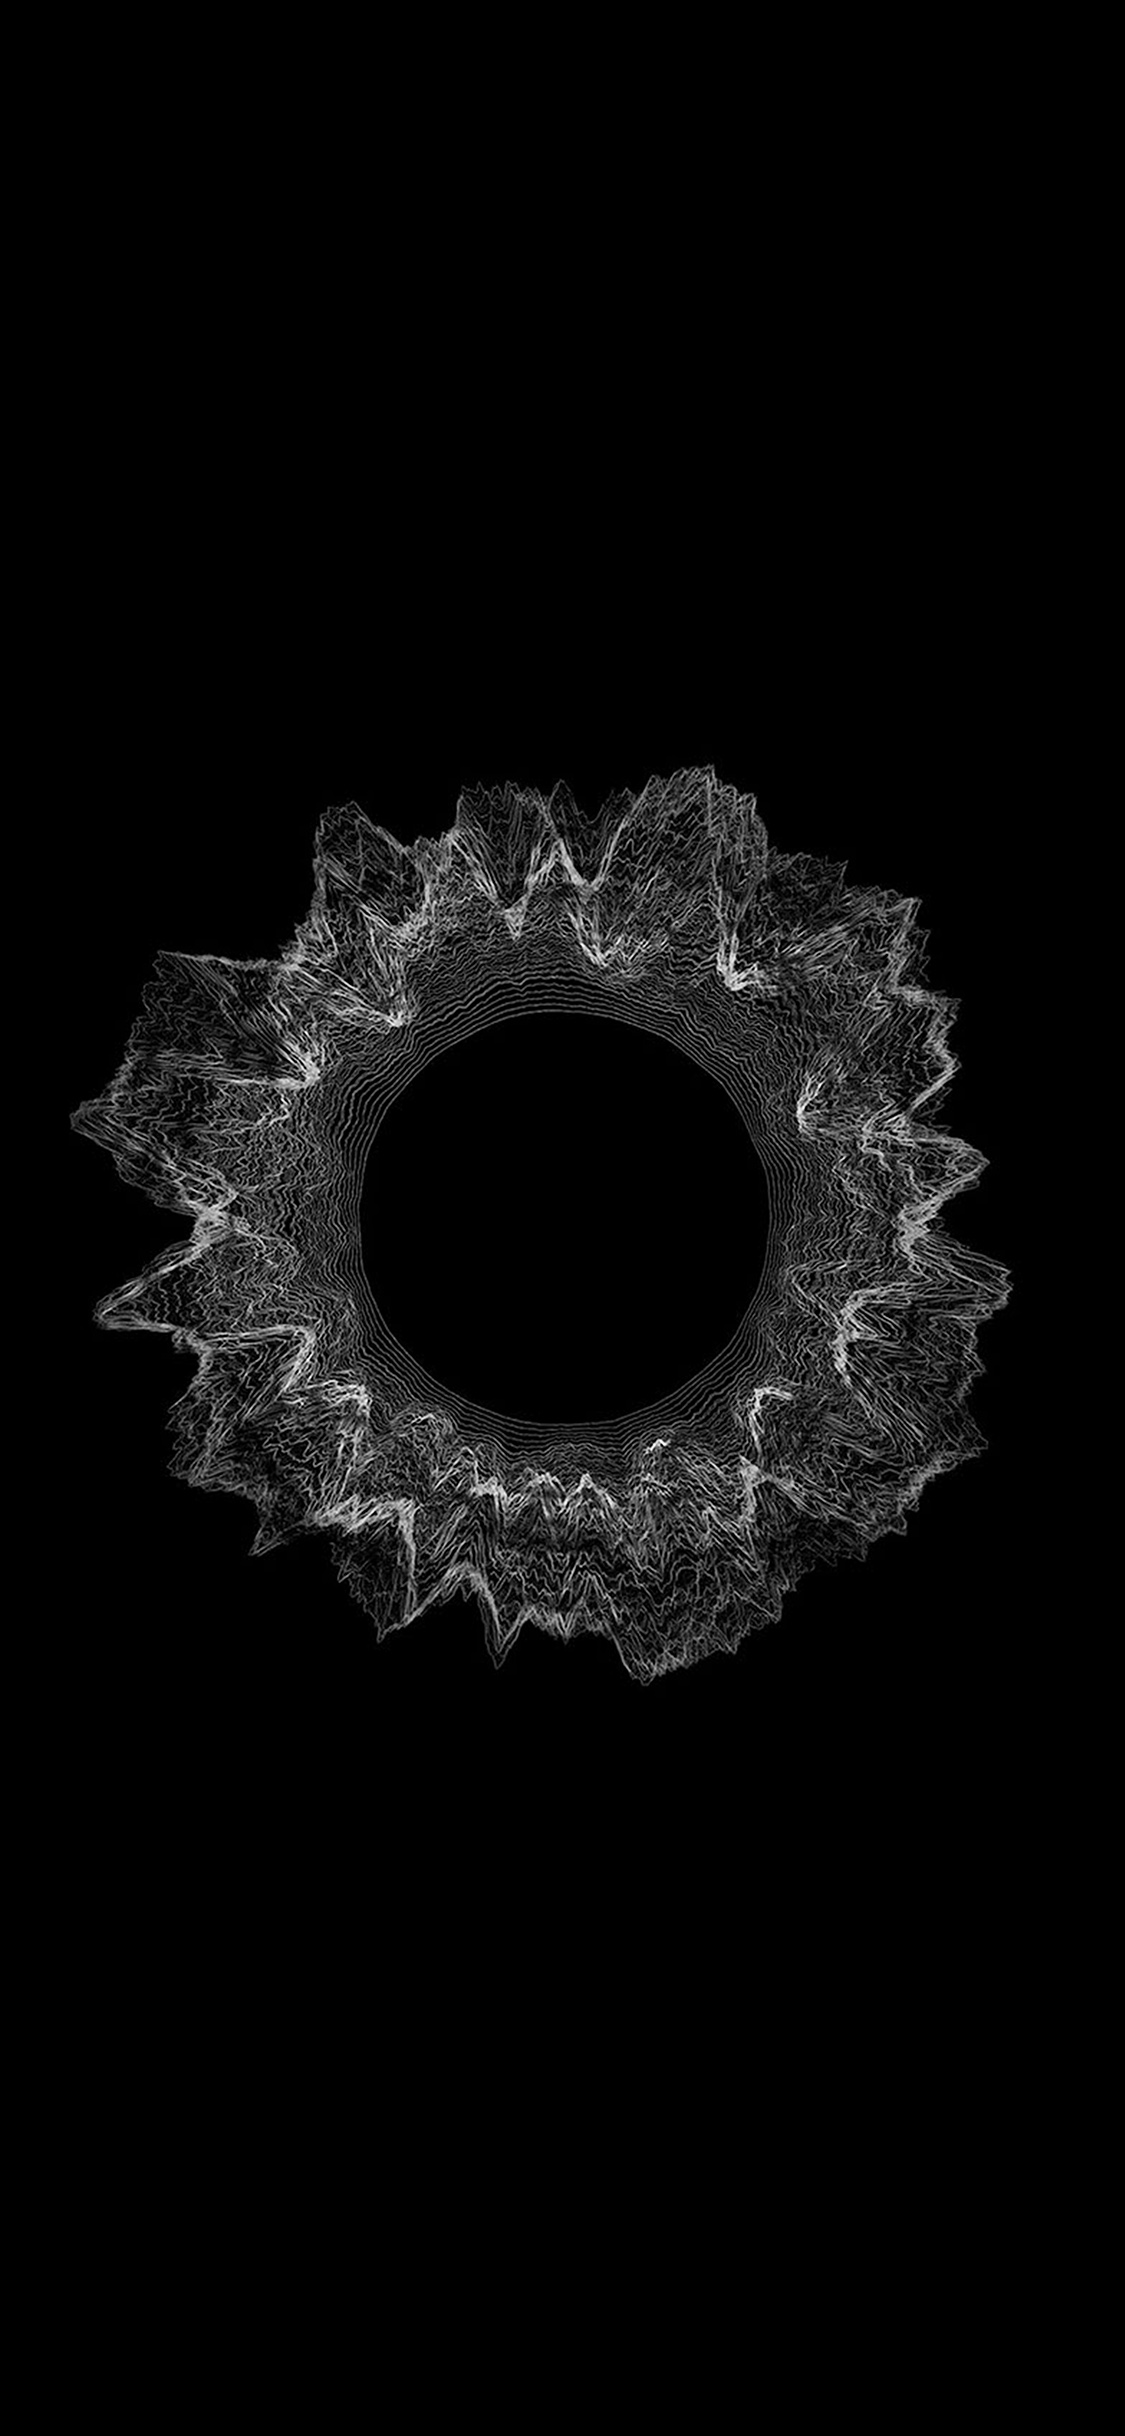 iPhoneXpapers bw circle minimal abstract digital art pattern